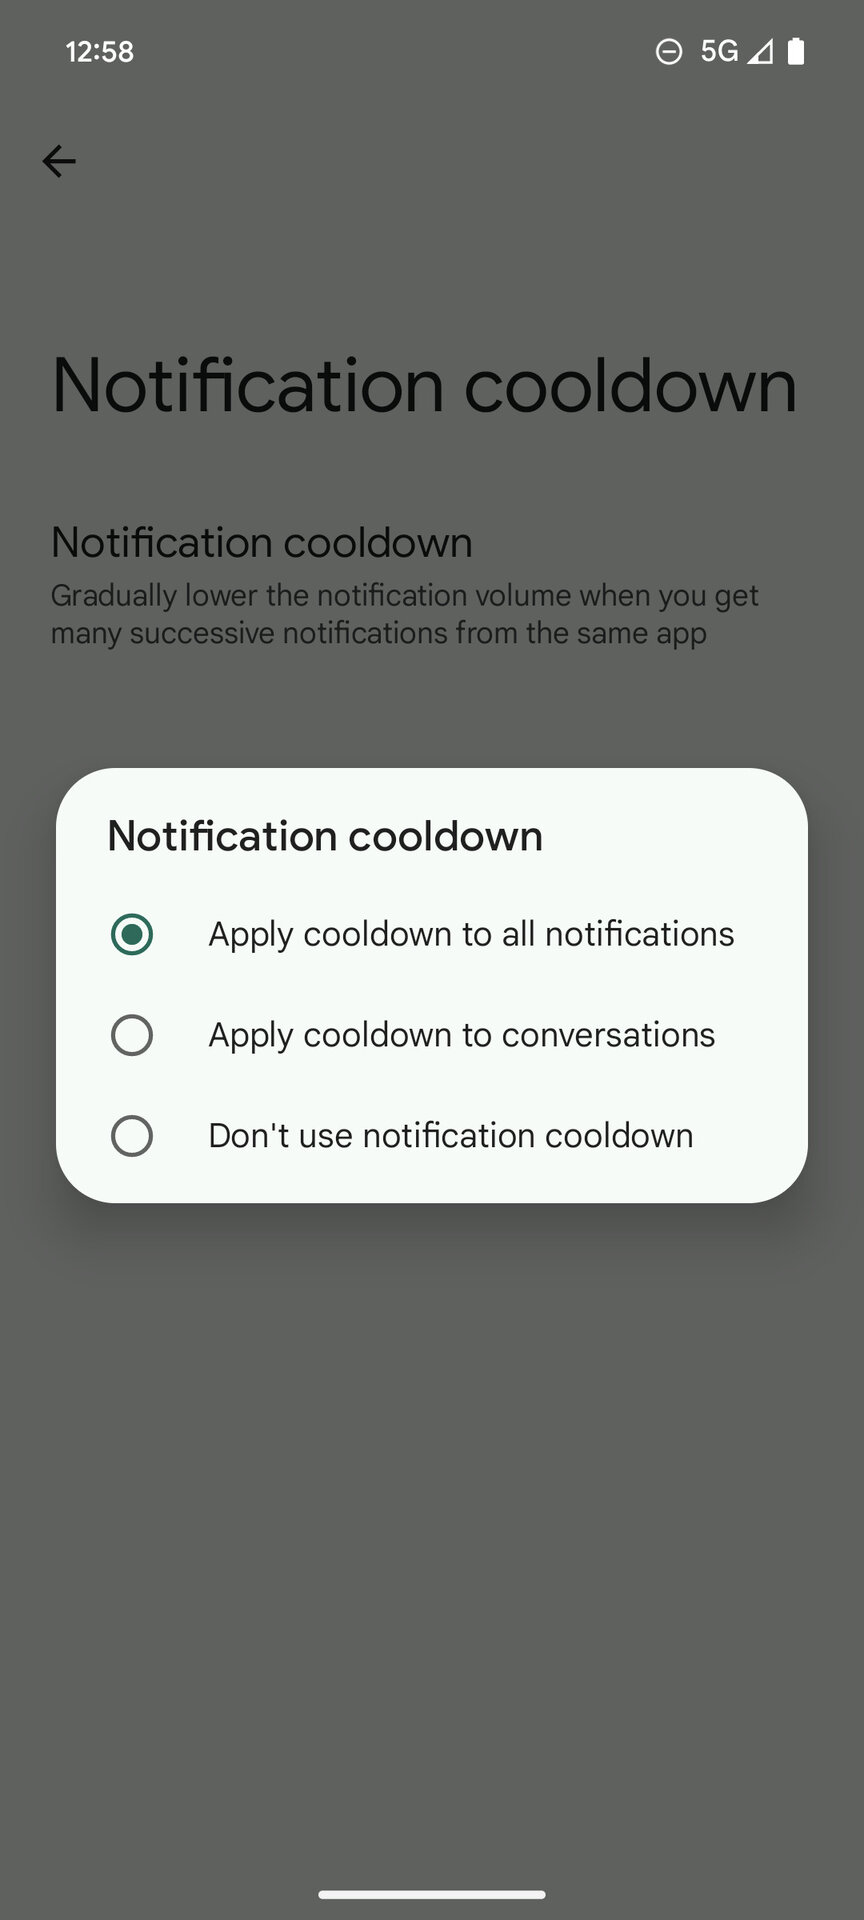 Notification cooldown card